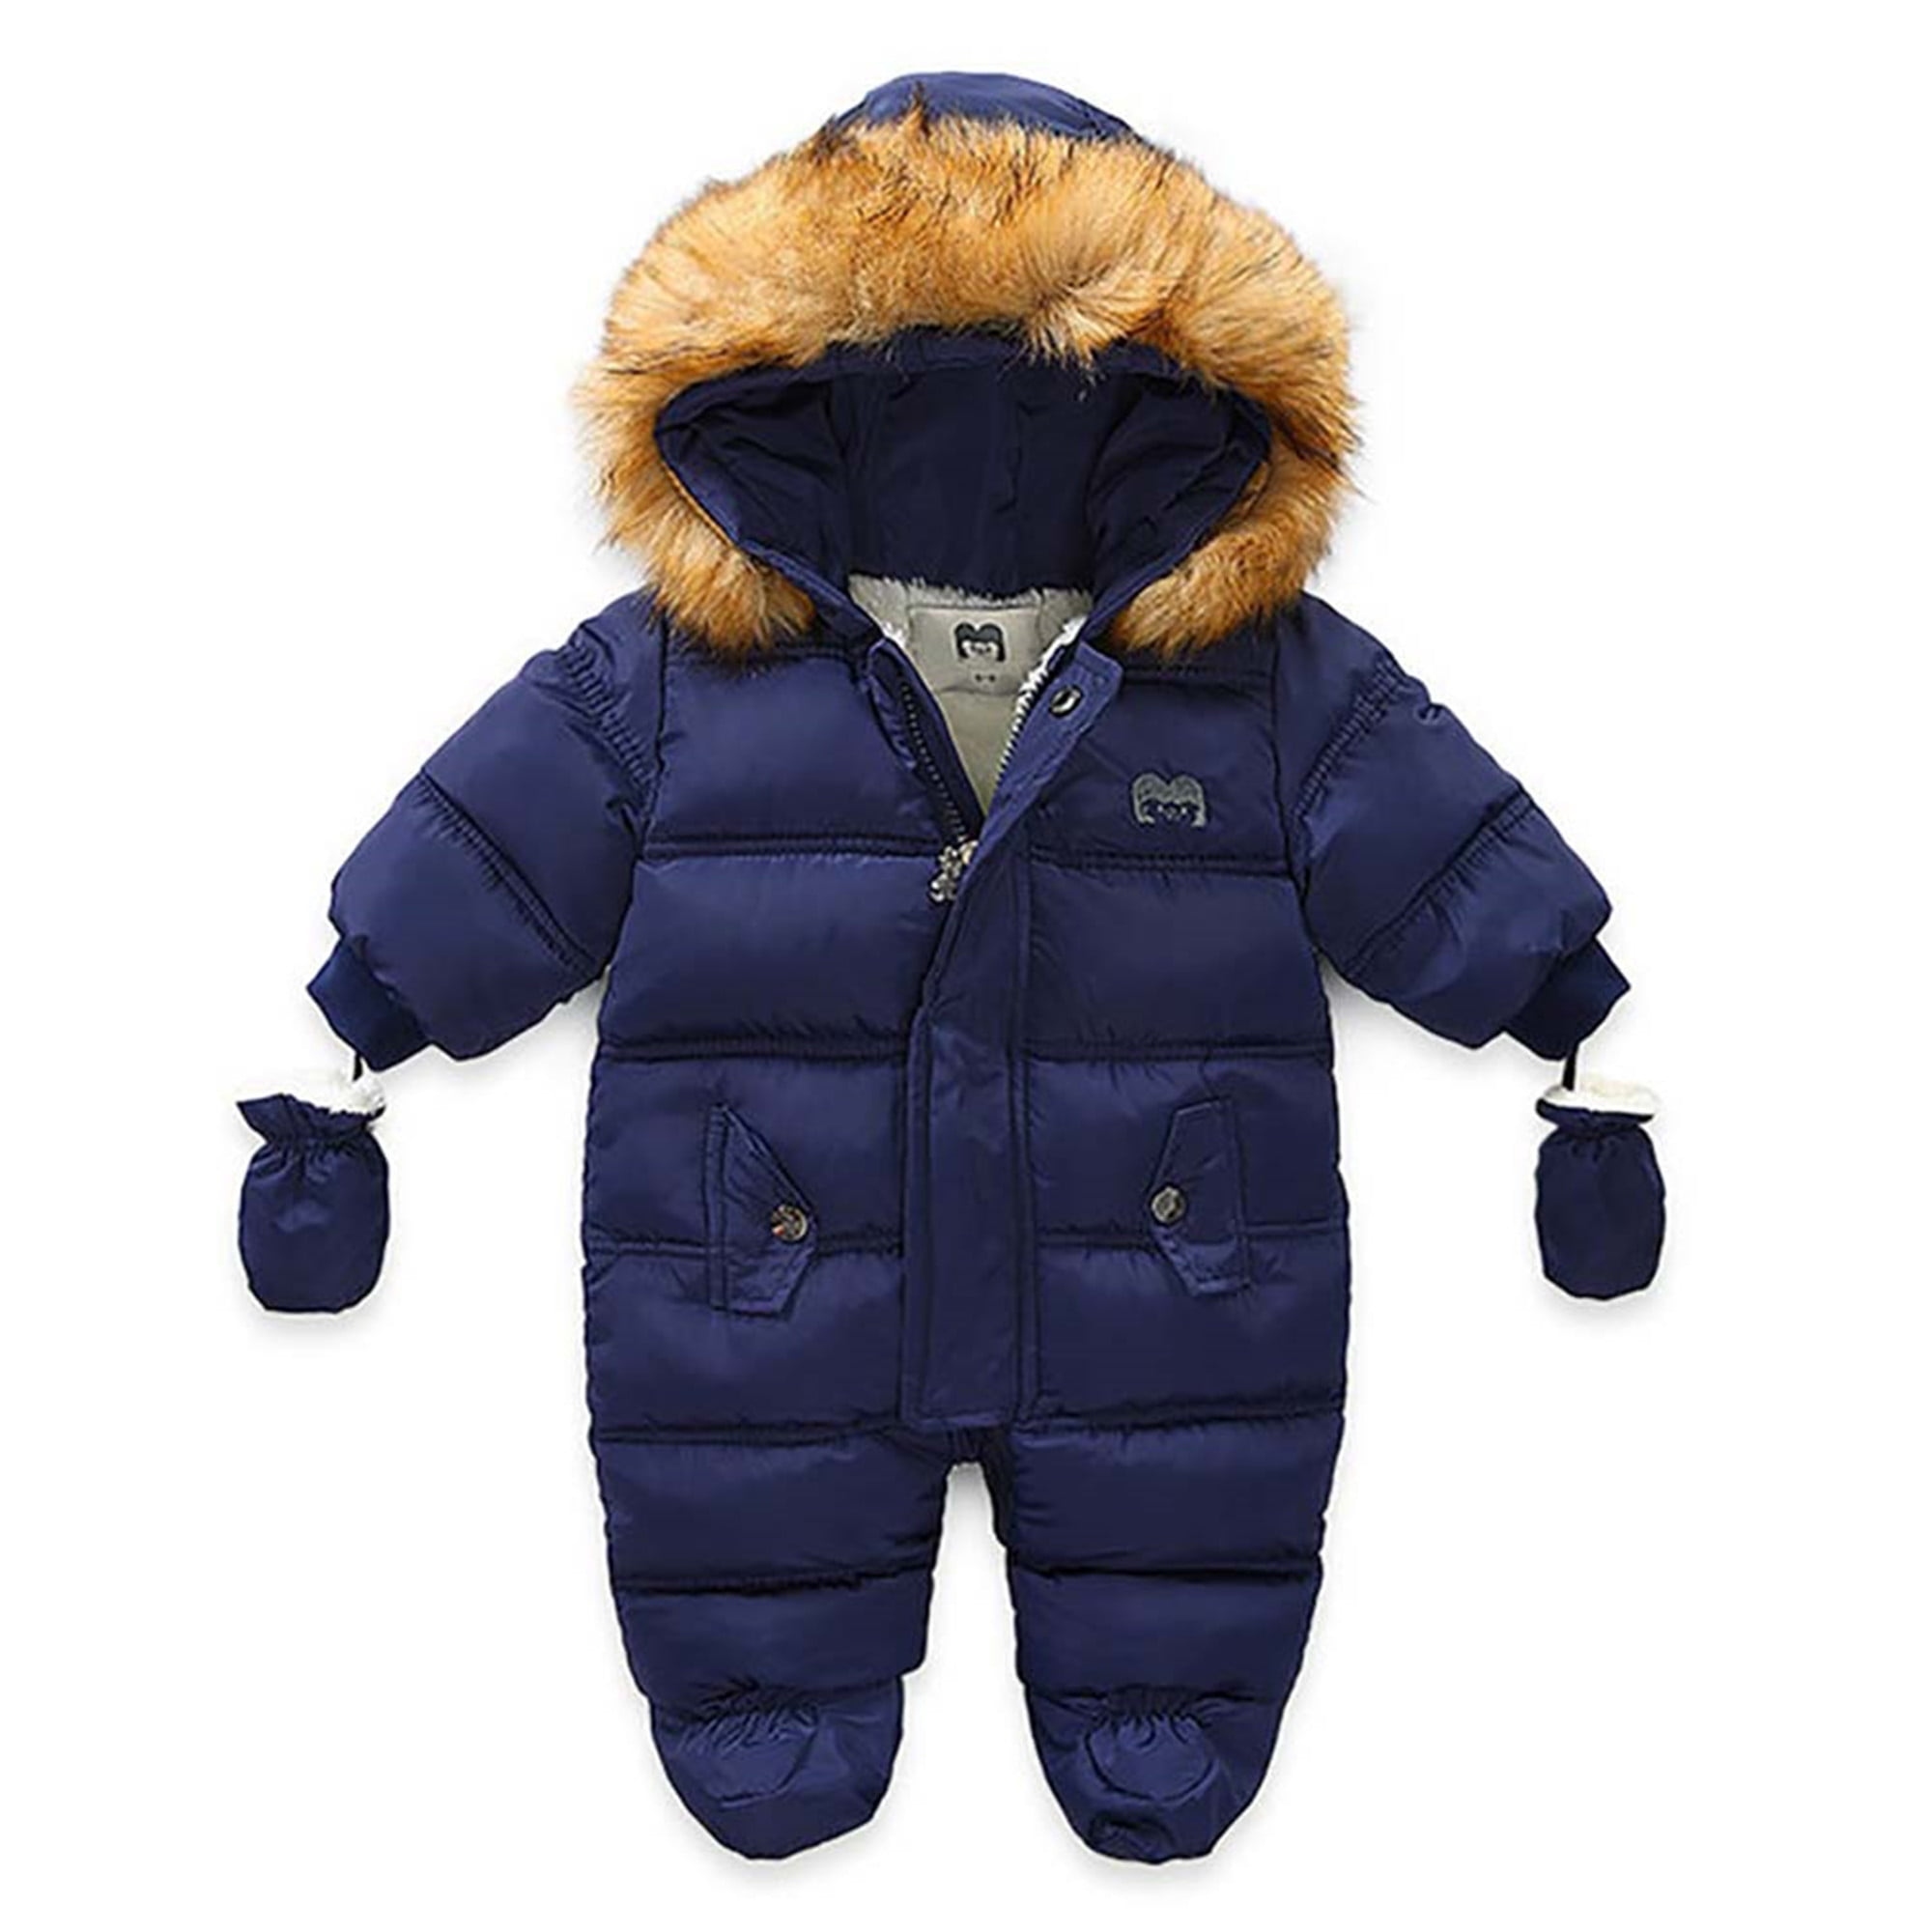 Newborn Baby Boy Girl Winter Outfits Jumpsuit Hooded Romper Warm Coat Outwear US 